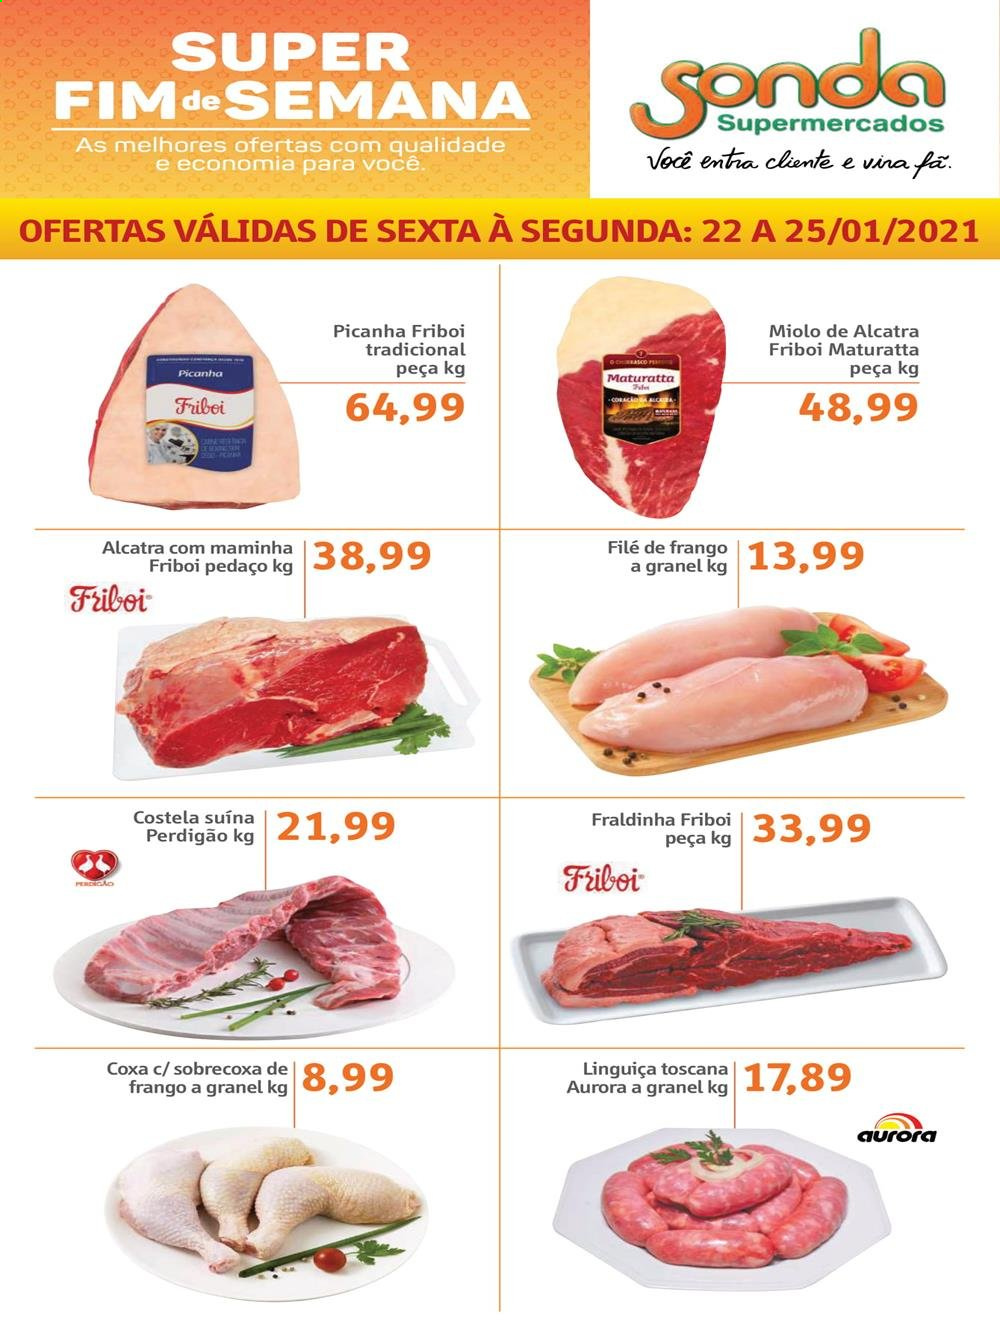 Encarte Sonda Supermercados  - 22.01.2021 - 25.01.2021.